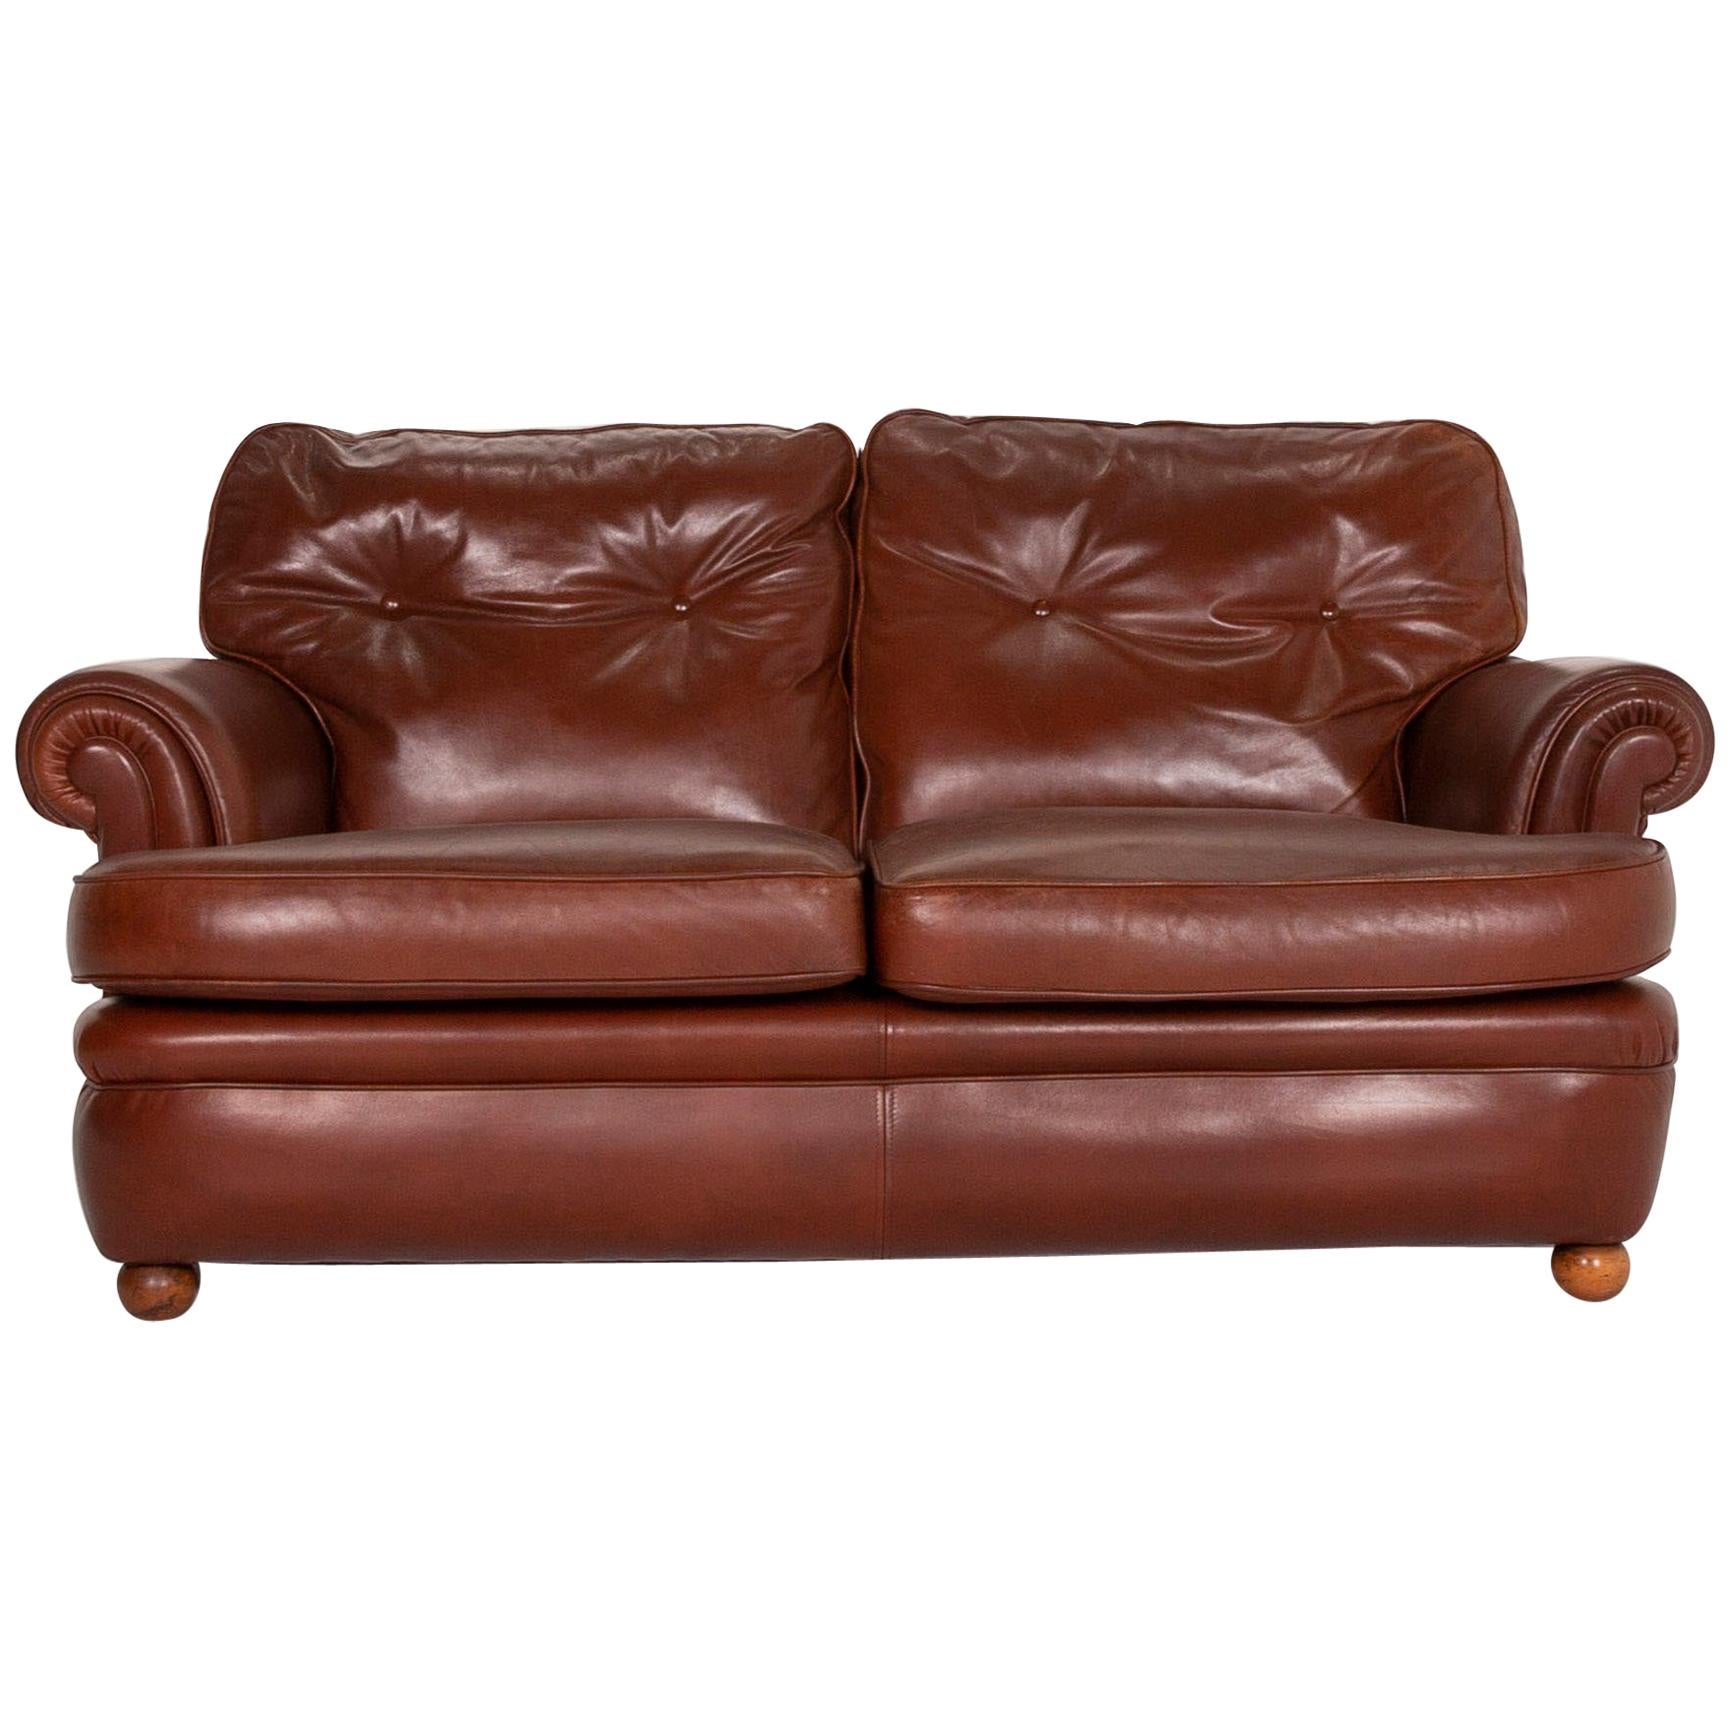 Poltrona Frau Leather Sofa Cognac Two-Seat